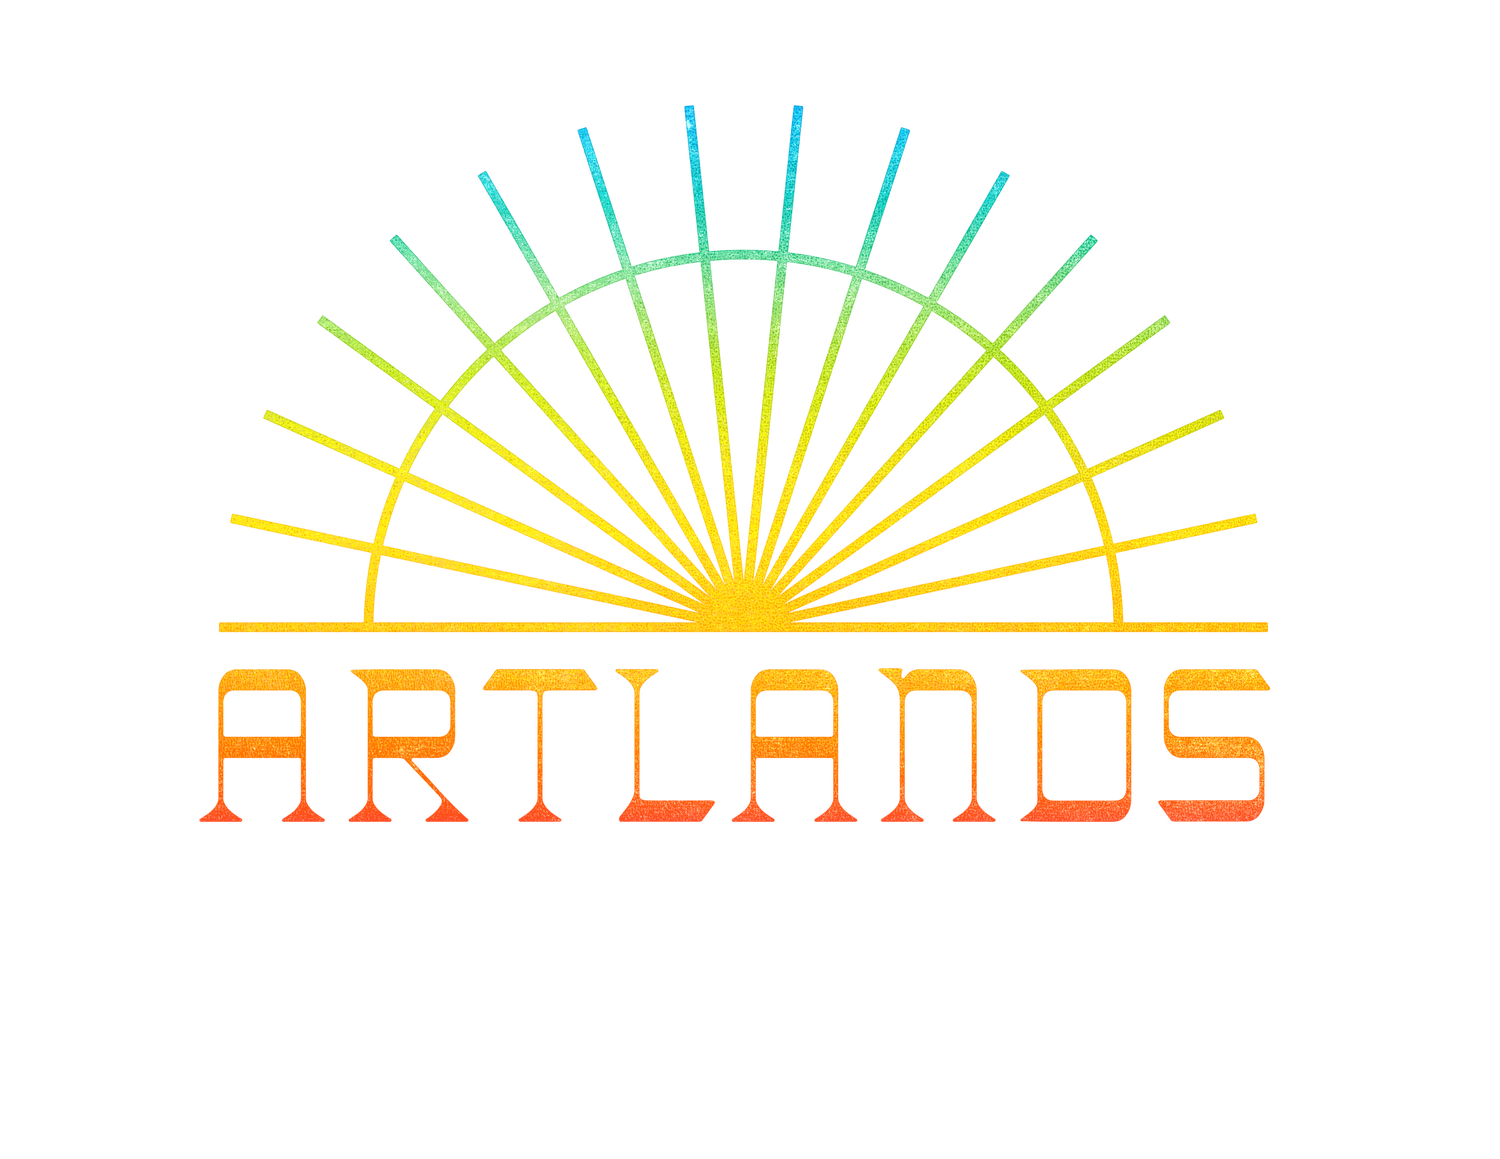 The Artlands Creative